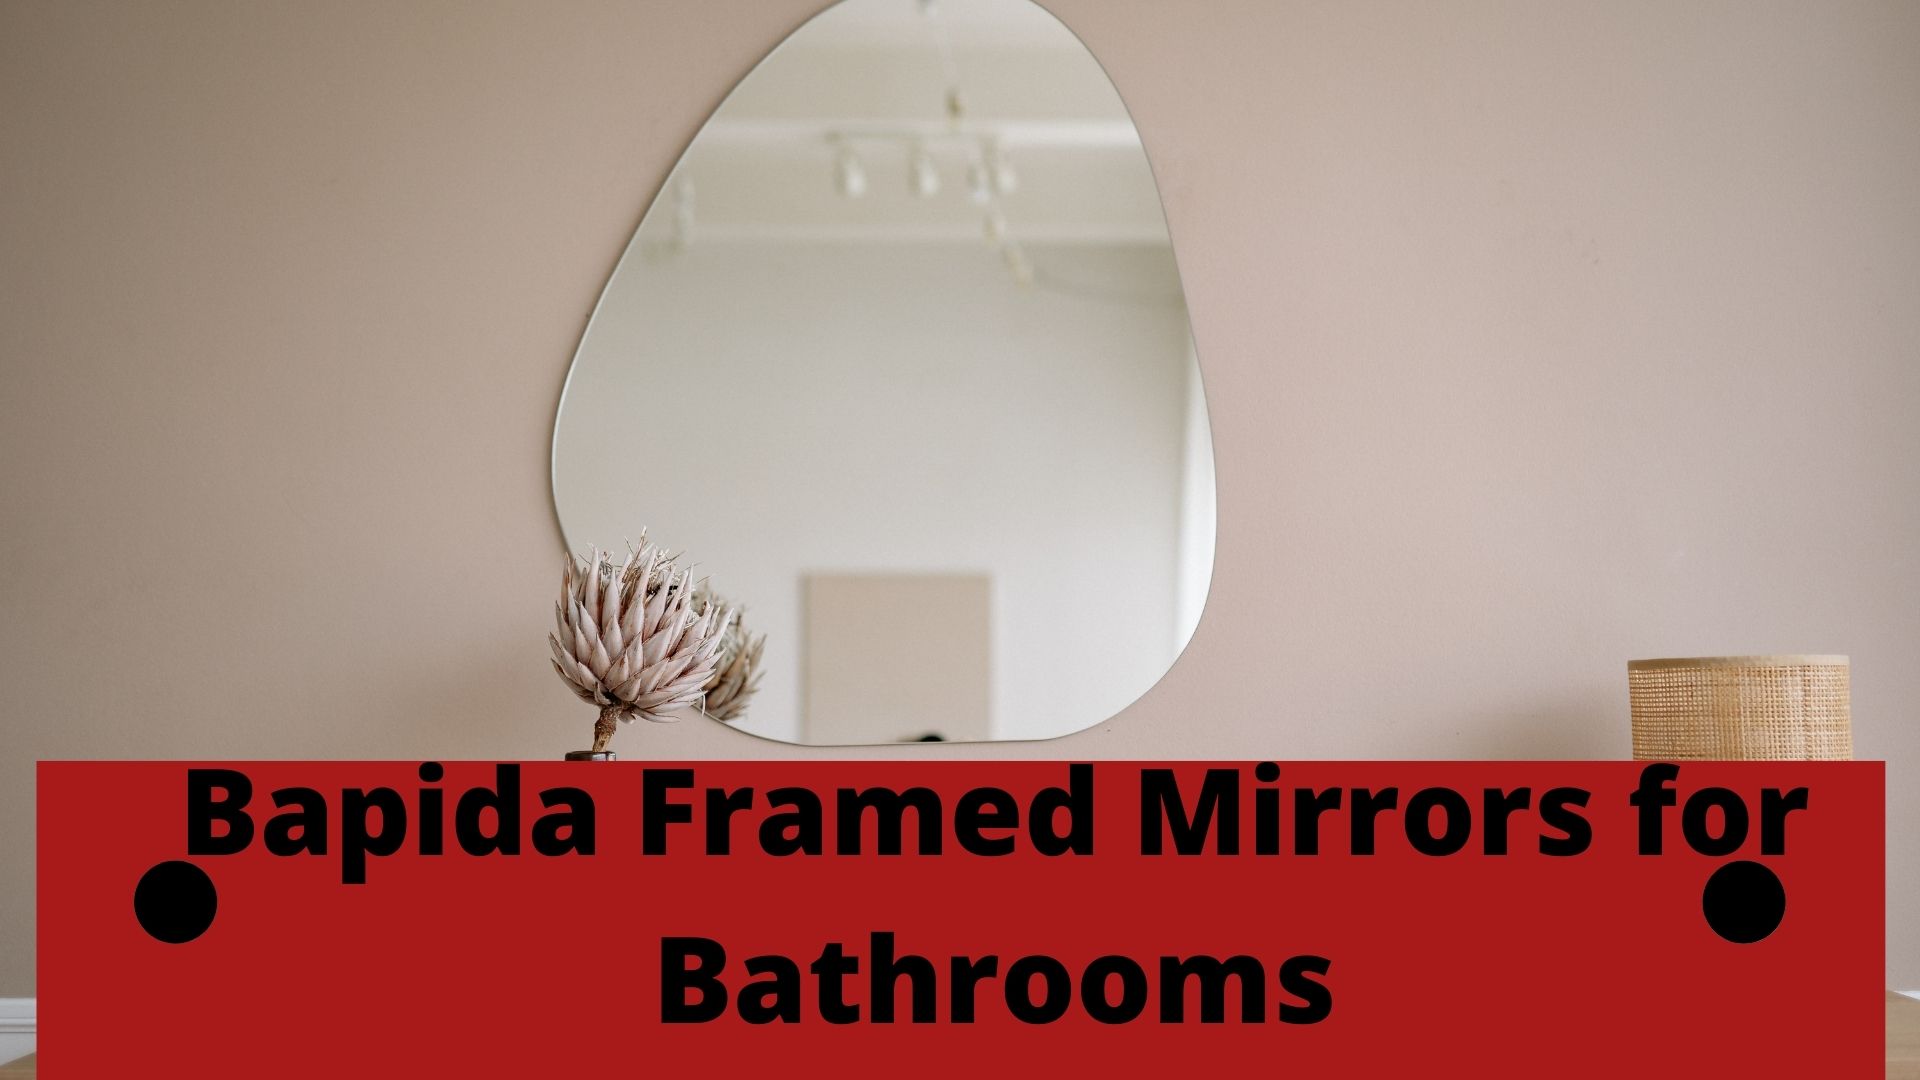 Bapida Framed Mirrors for Bathrooms